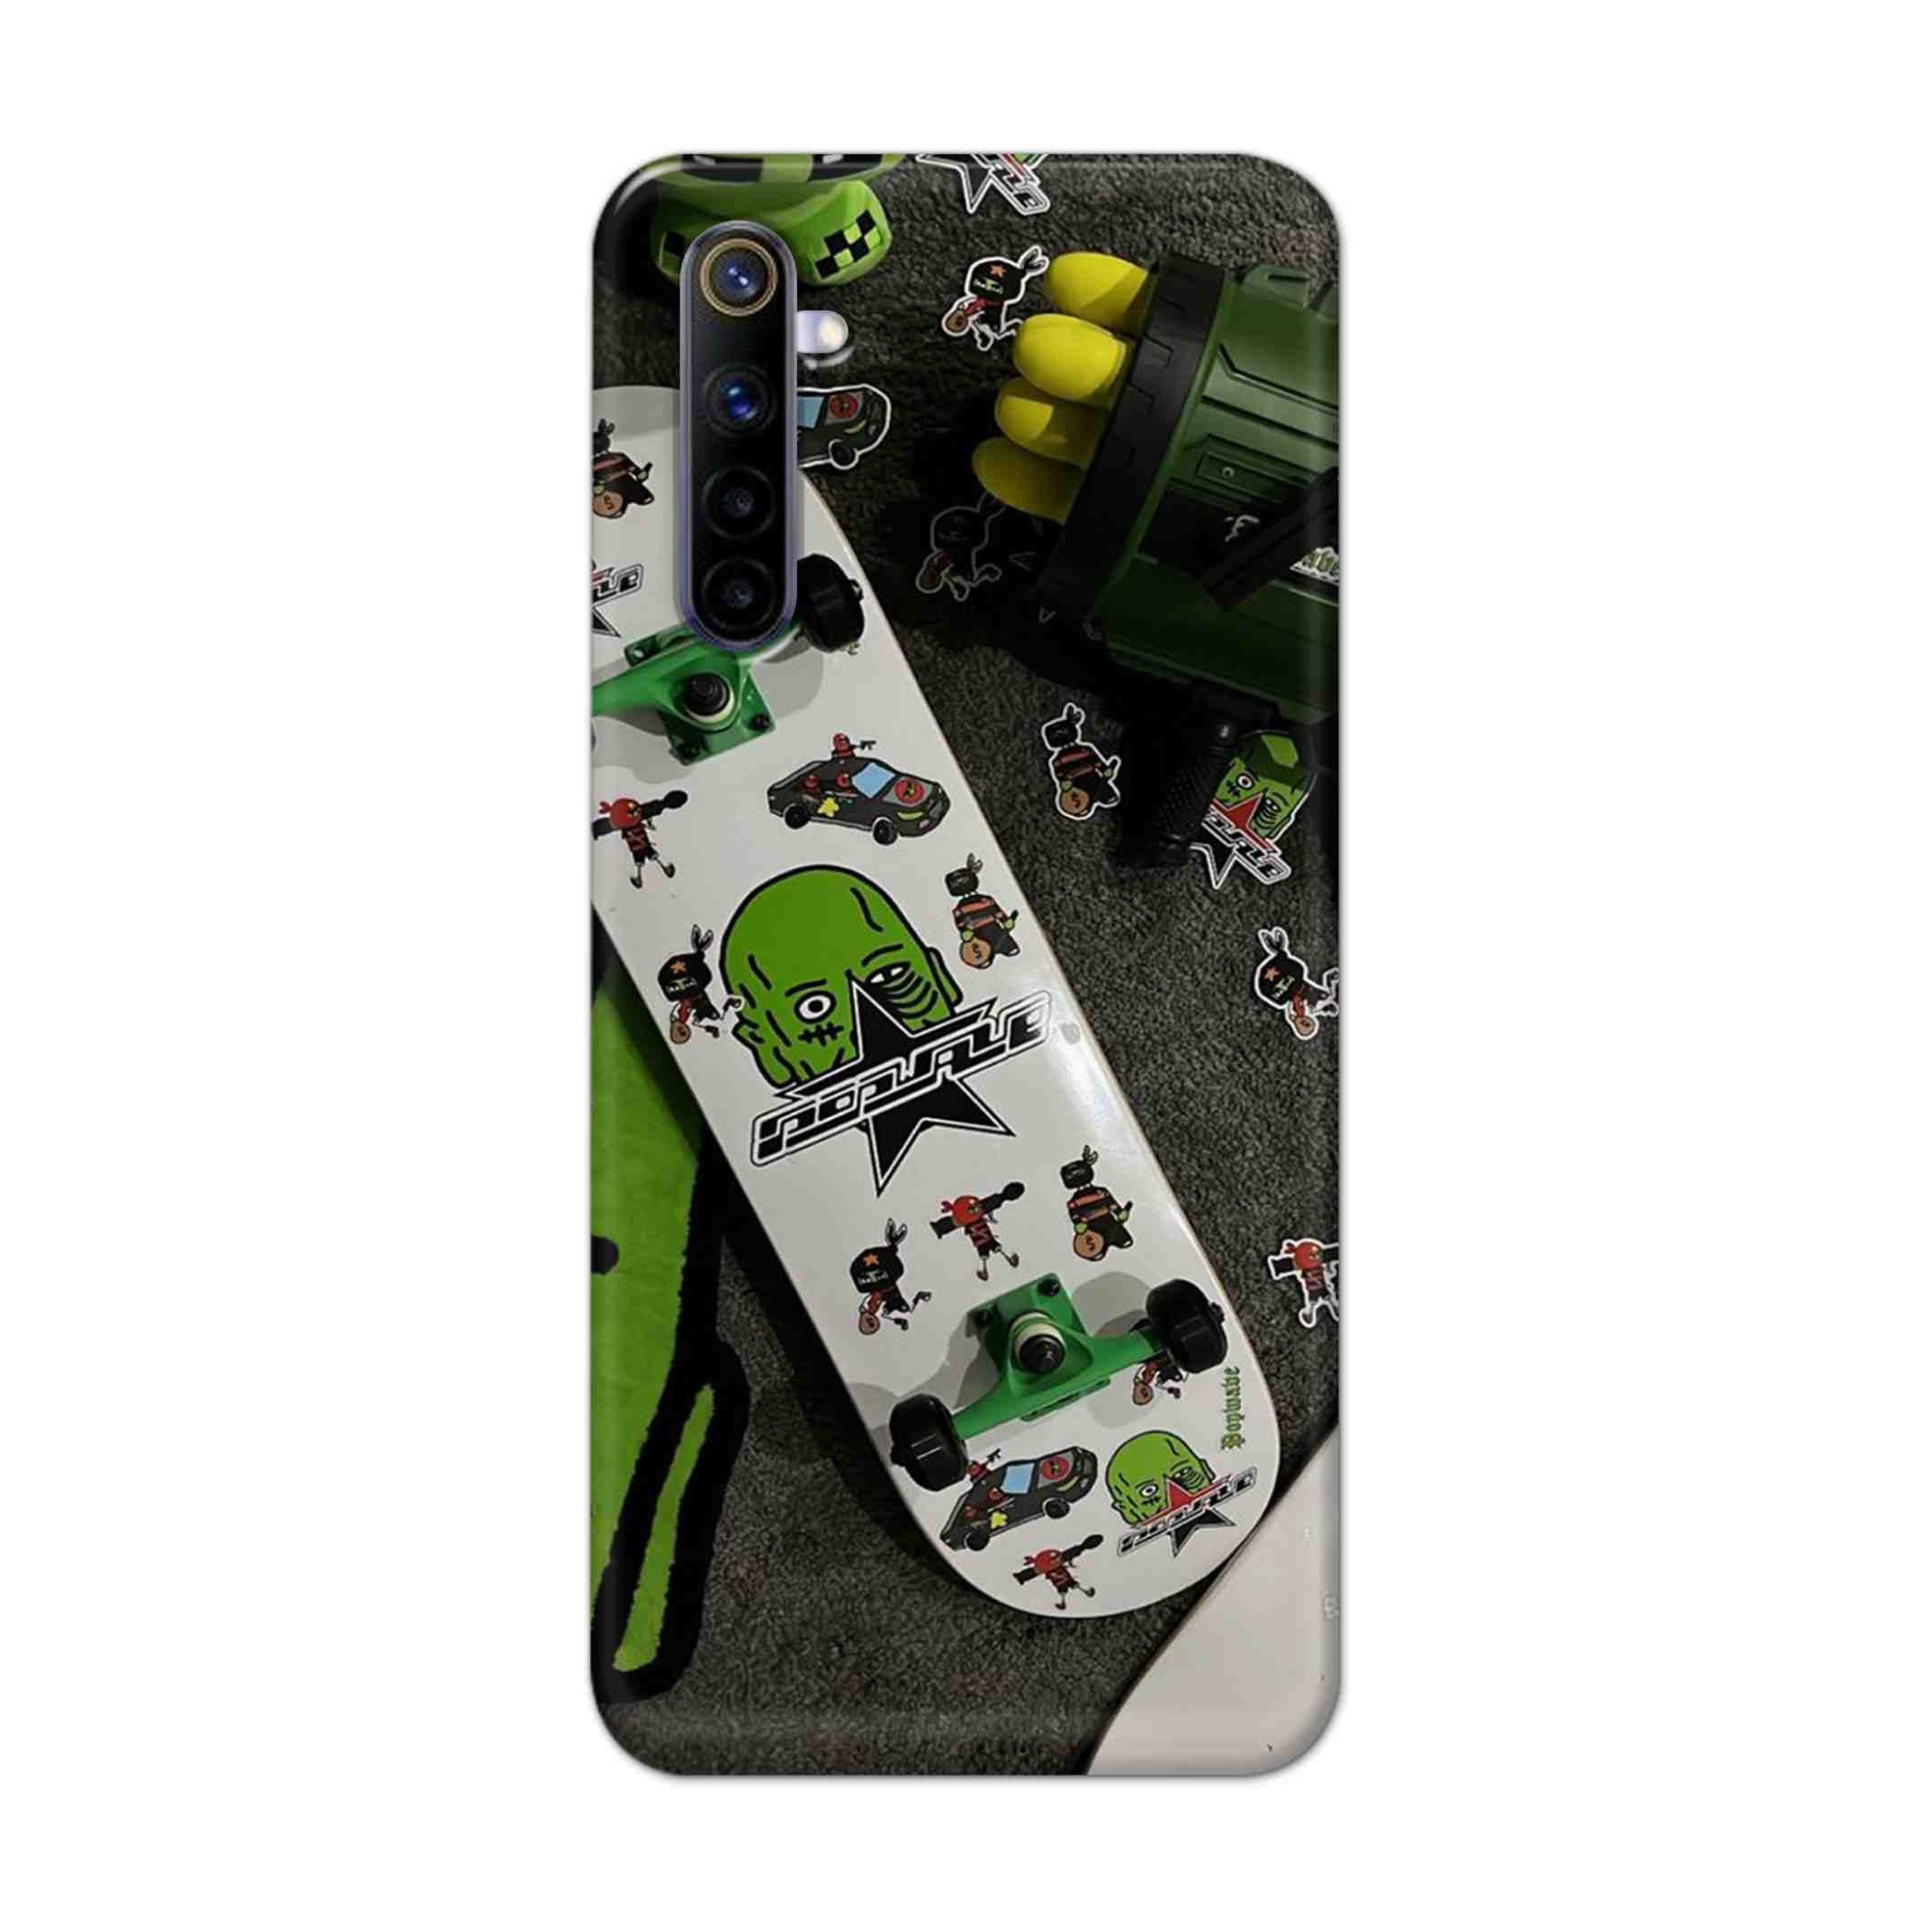 Buy Hulk Skateboard Hard Back Mobile Phone Case Cover For REALME 6 Online